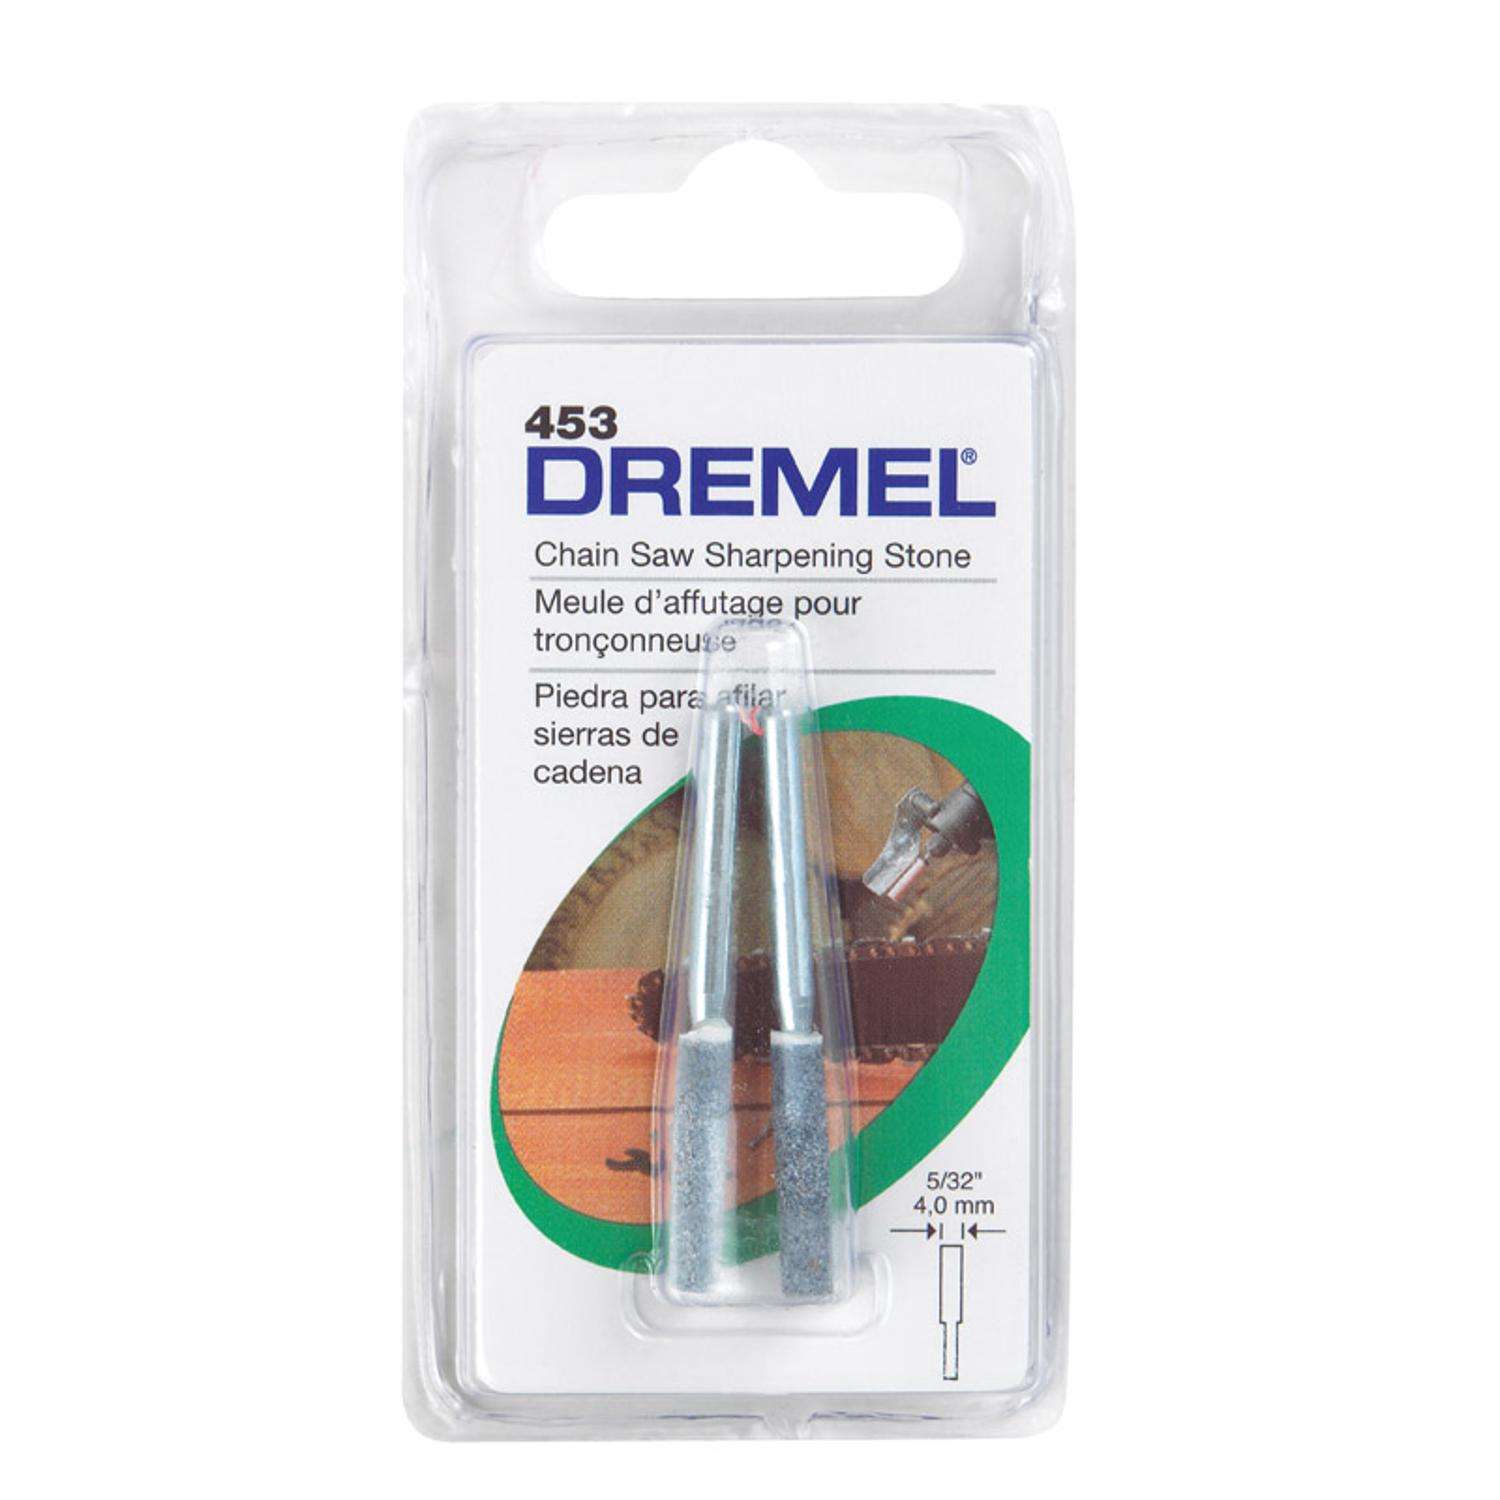 Dremel 453 5/32 inch Chainsaw Sharpening Stone